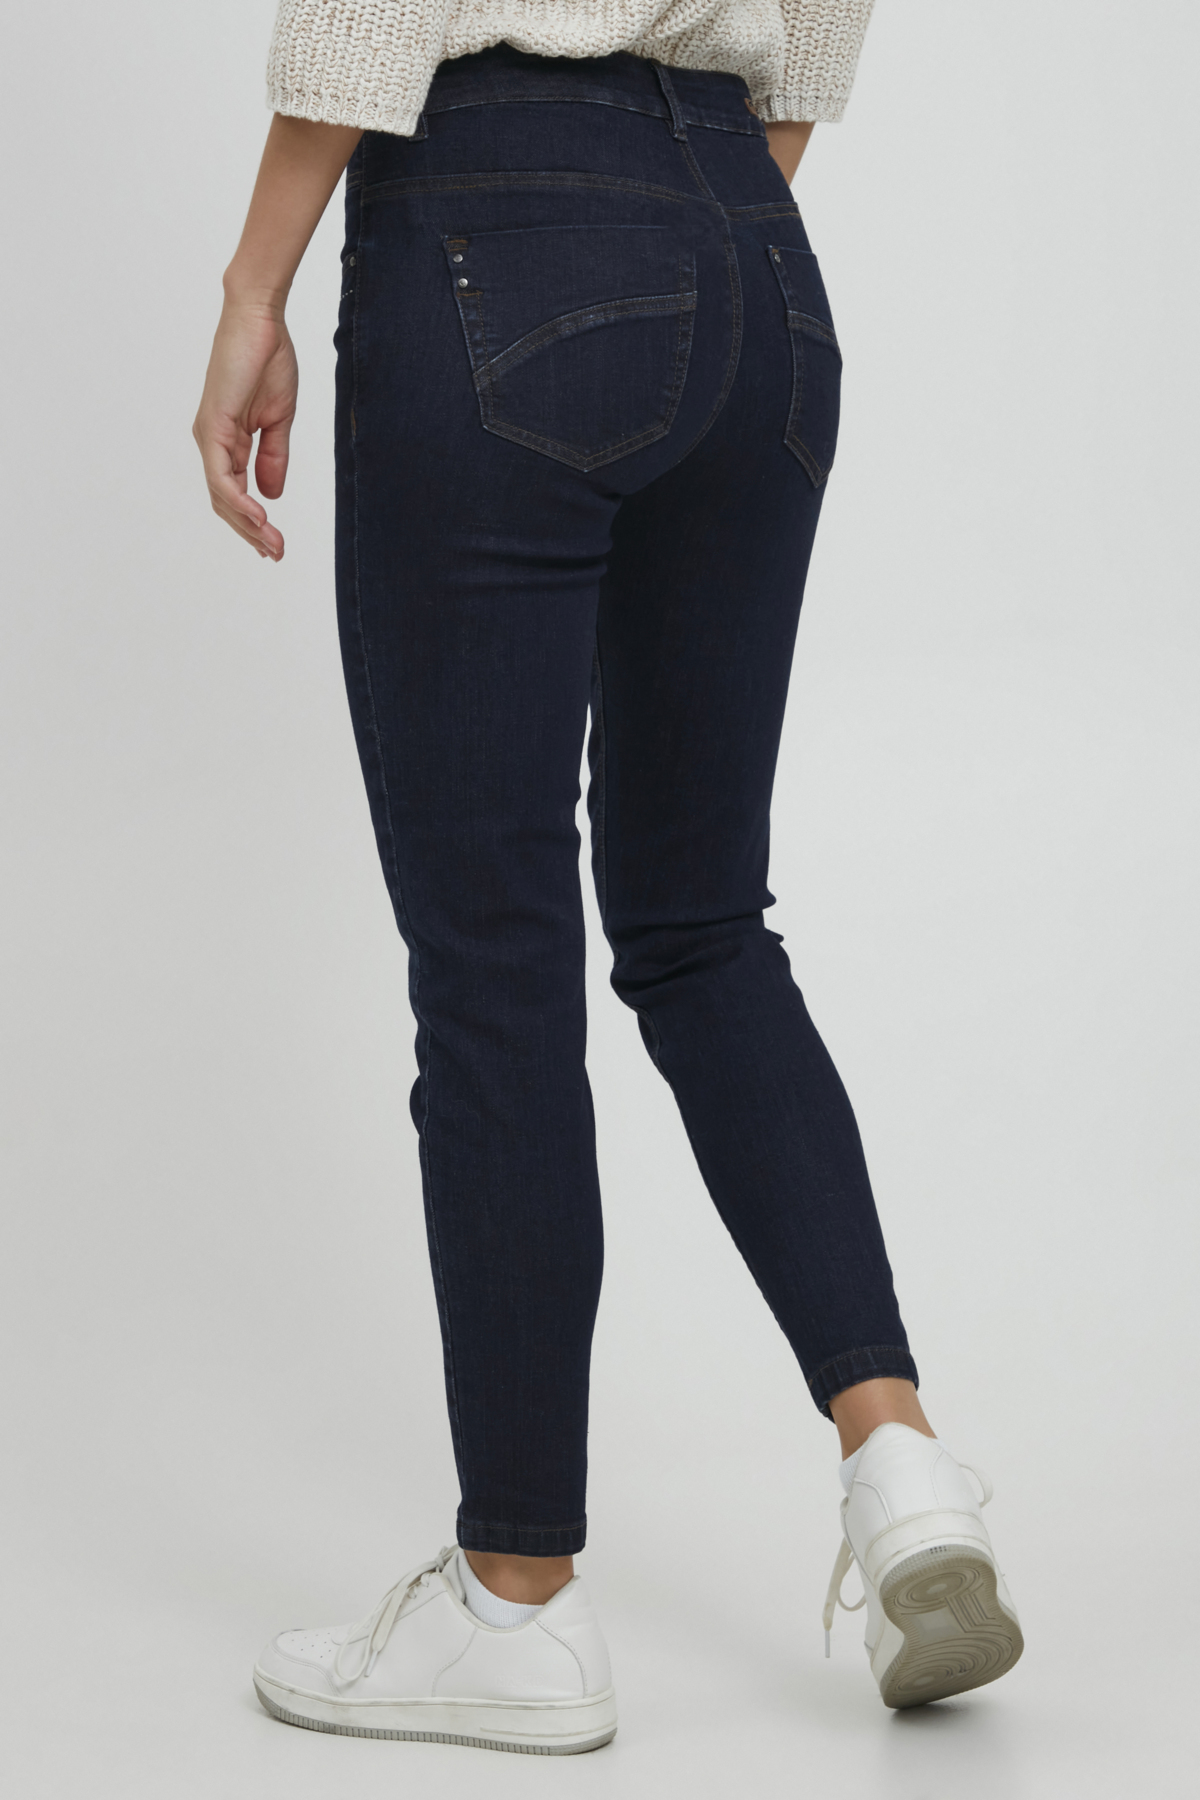 dug følsomhed Opfylde Dranella Drtora Tessa Slim Jeans - Jeans & Bukser - By Haugsted